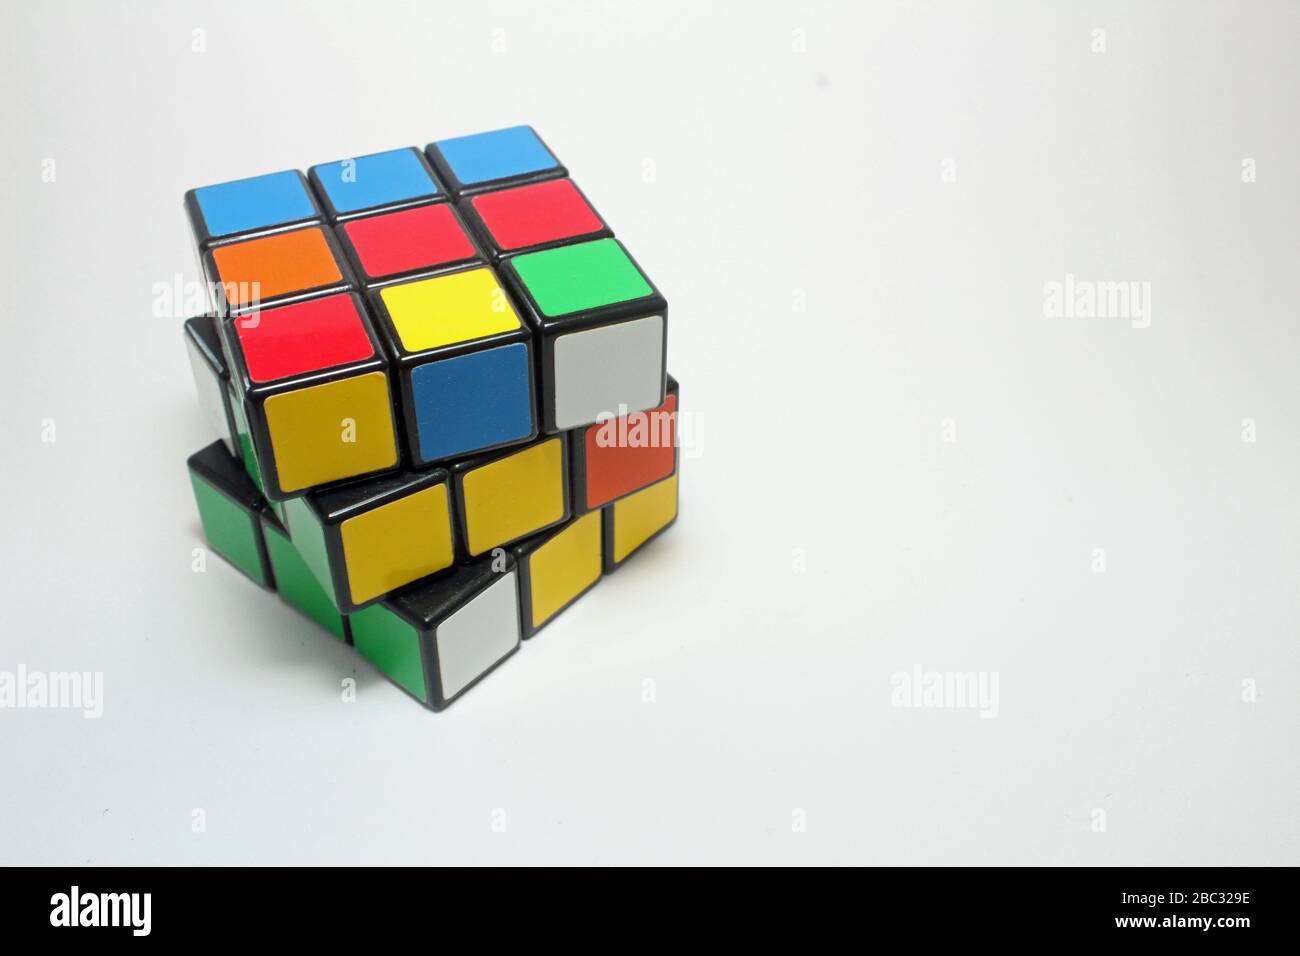 Rubik's cube Multi coloured Rubik's 3x3x3 classic cube puzzle Stock Photo